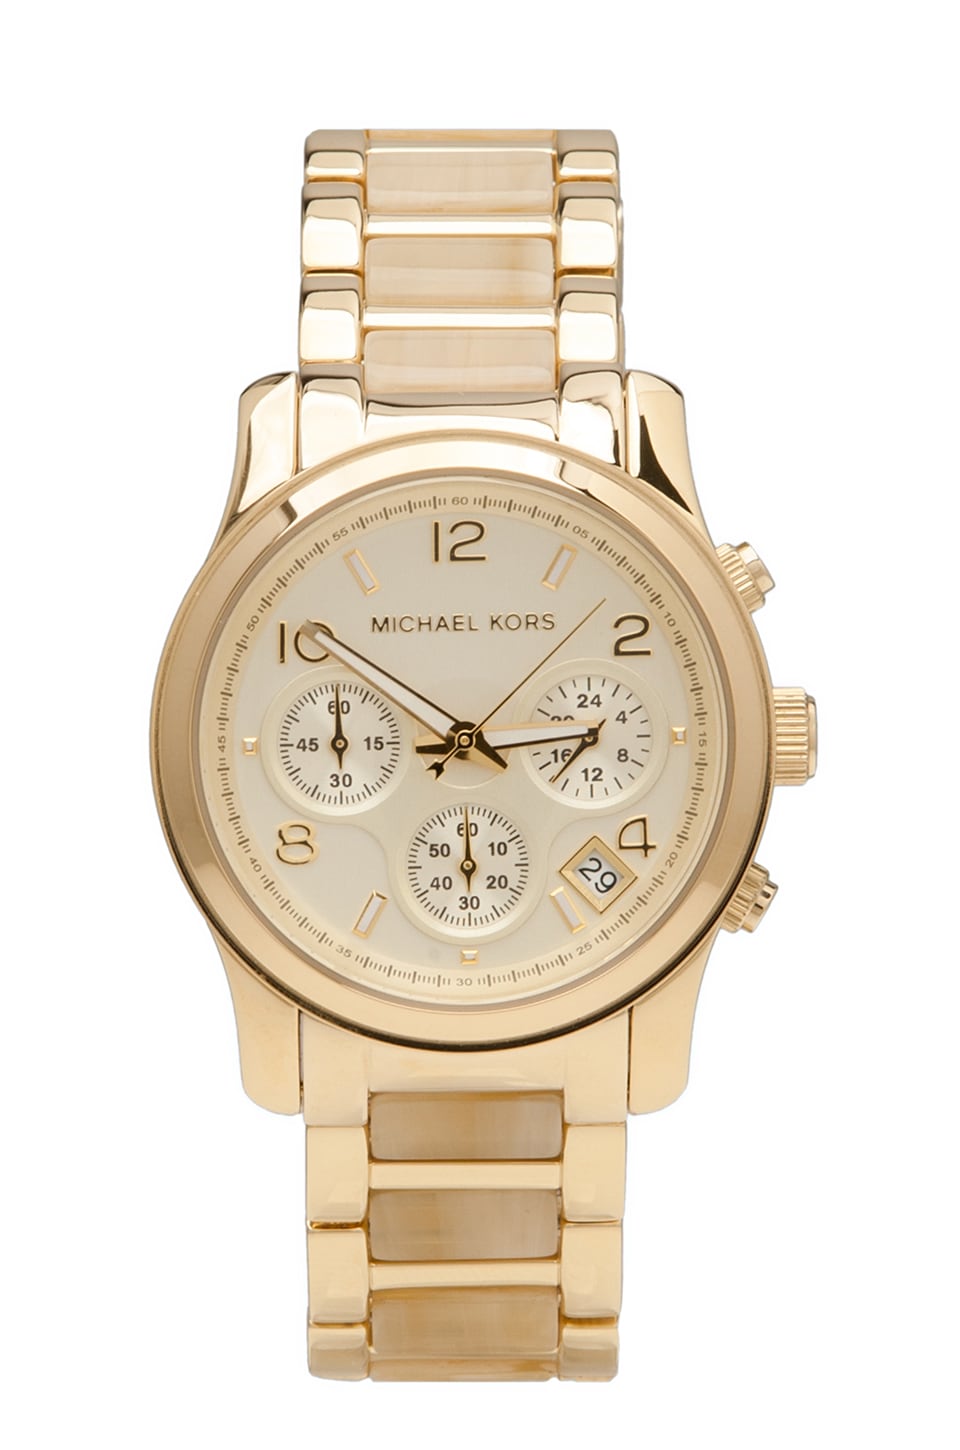 Michael Kors Runway Chronograph Watch in Bone & Gold | REVOLVE